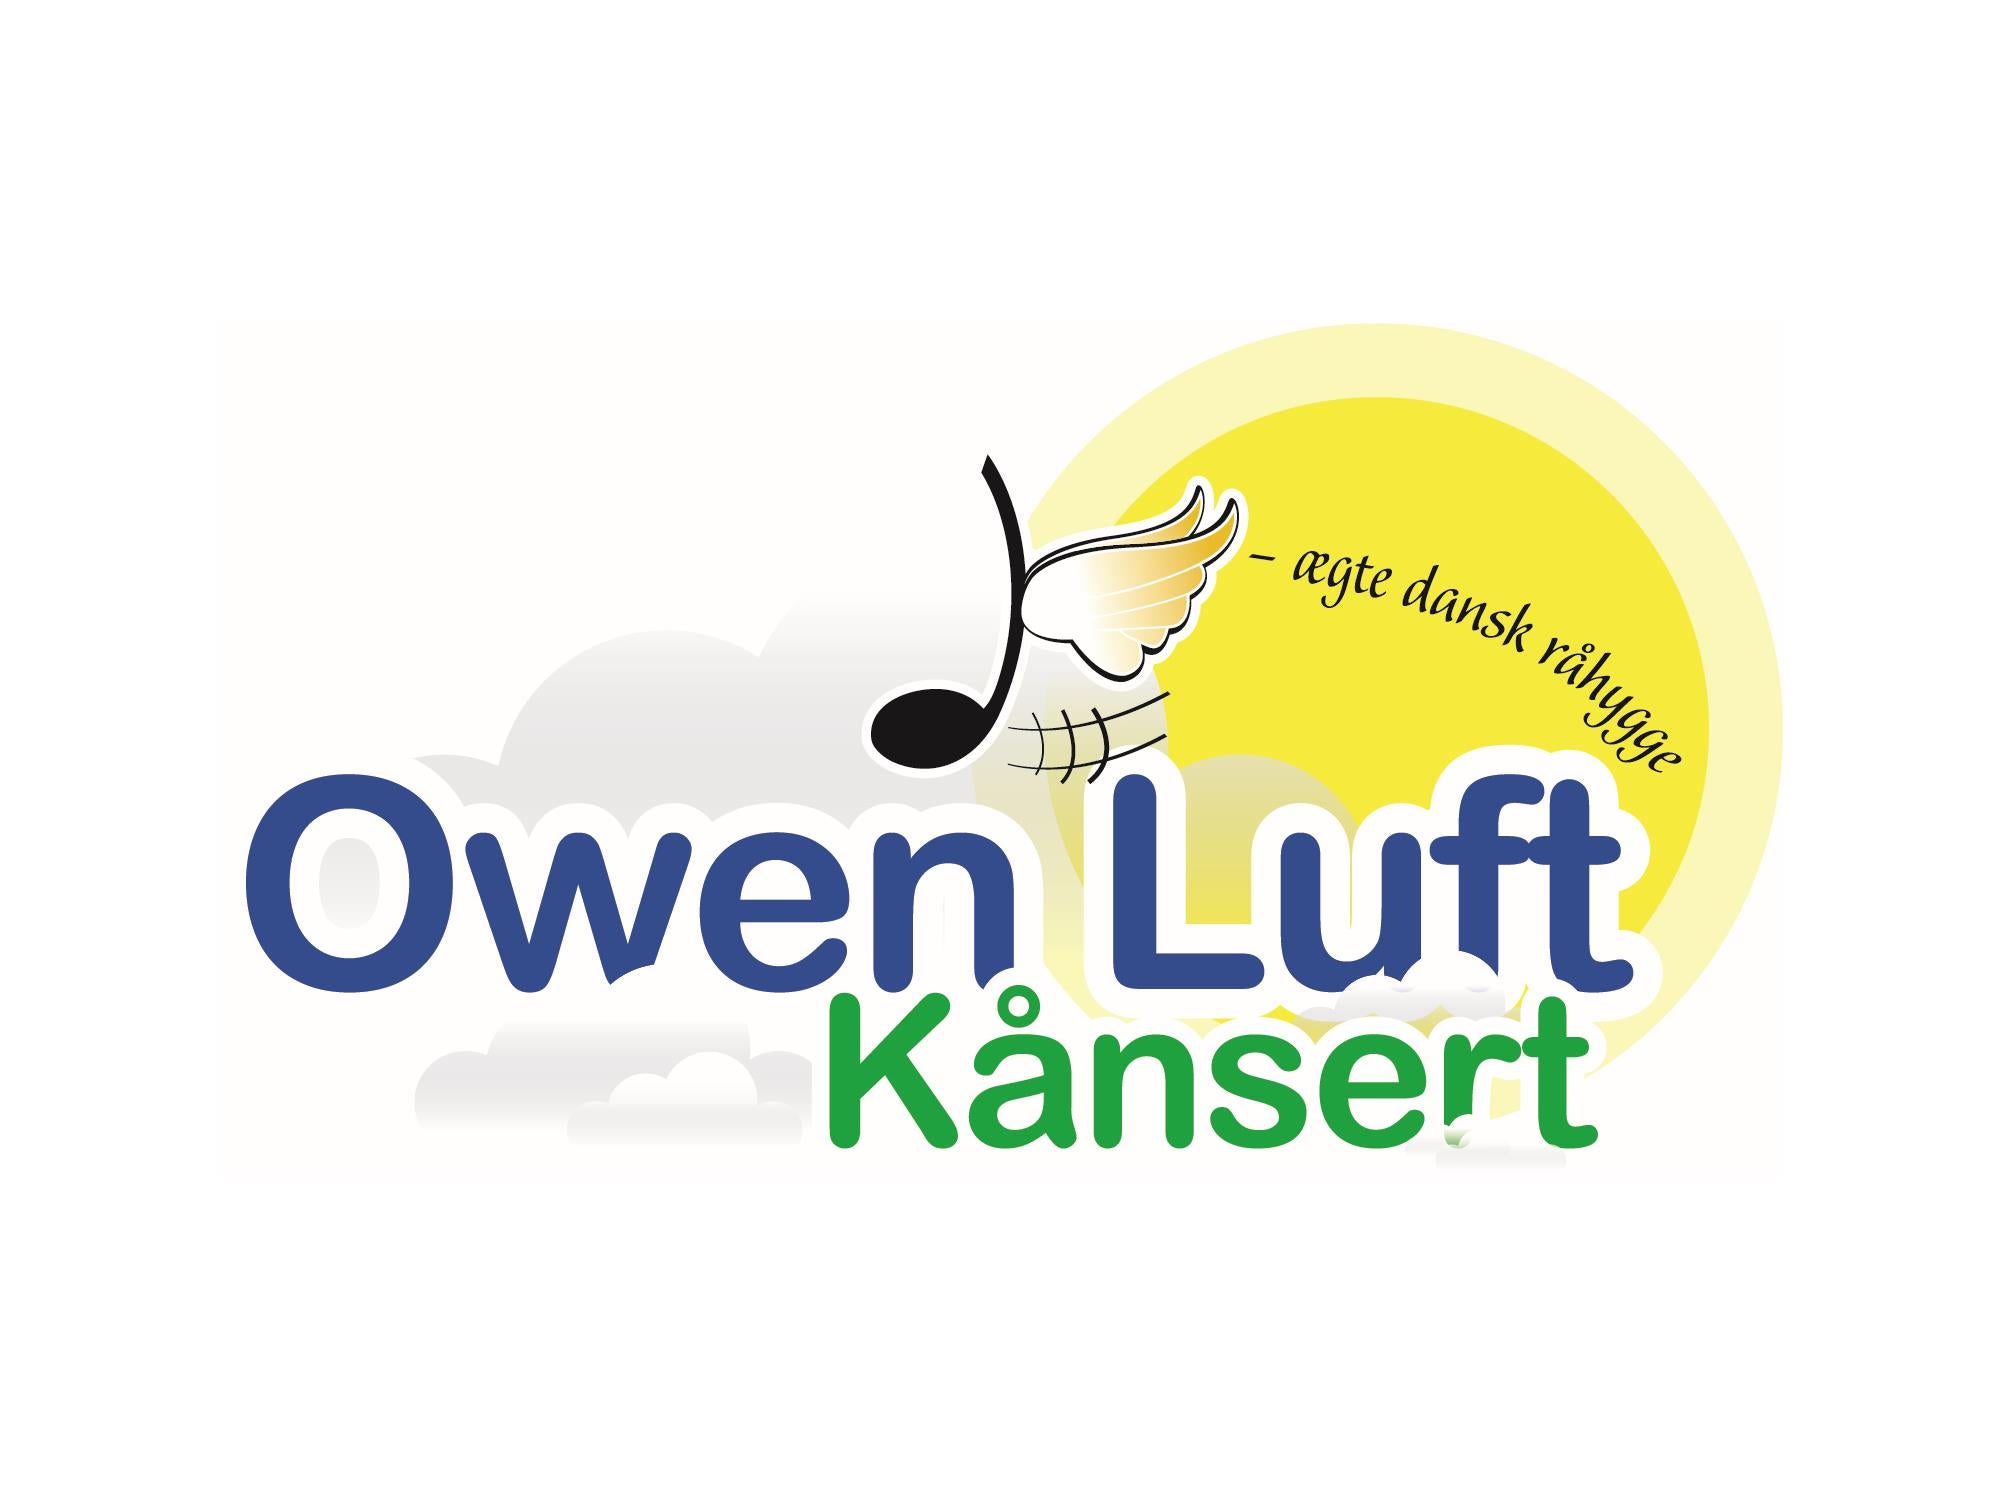 Owen Luft Kaansert presale information on freepresalepasswords.com